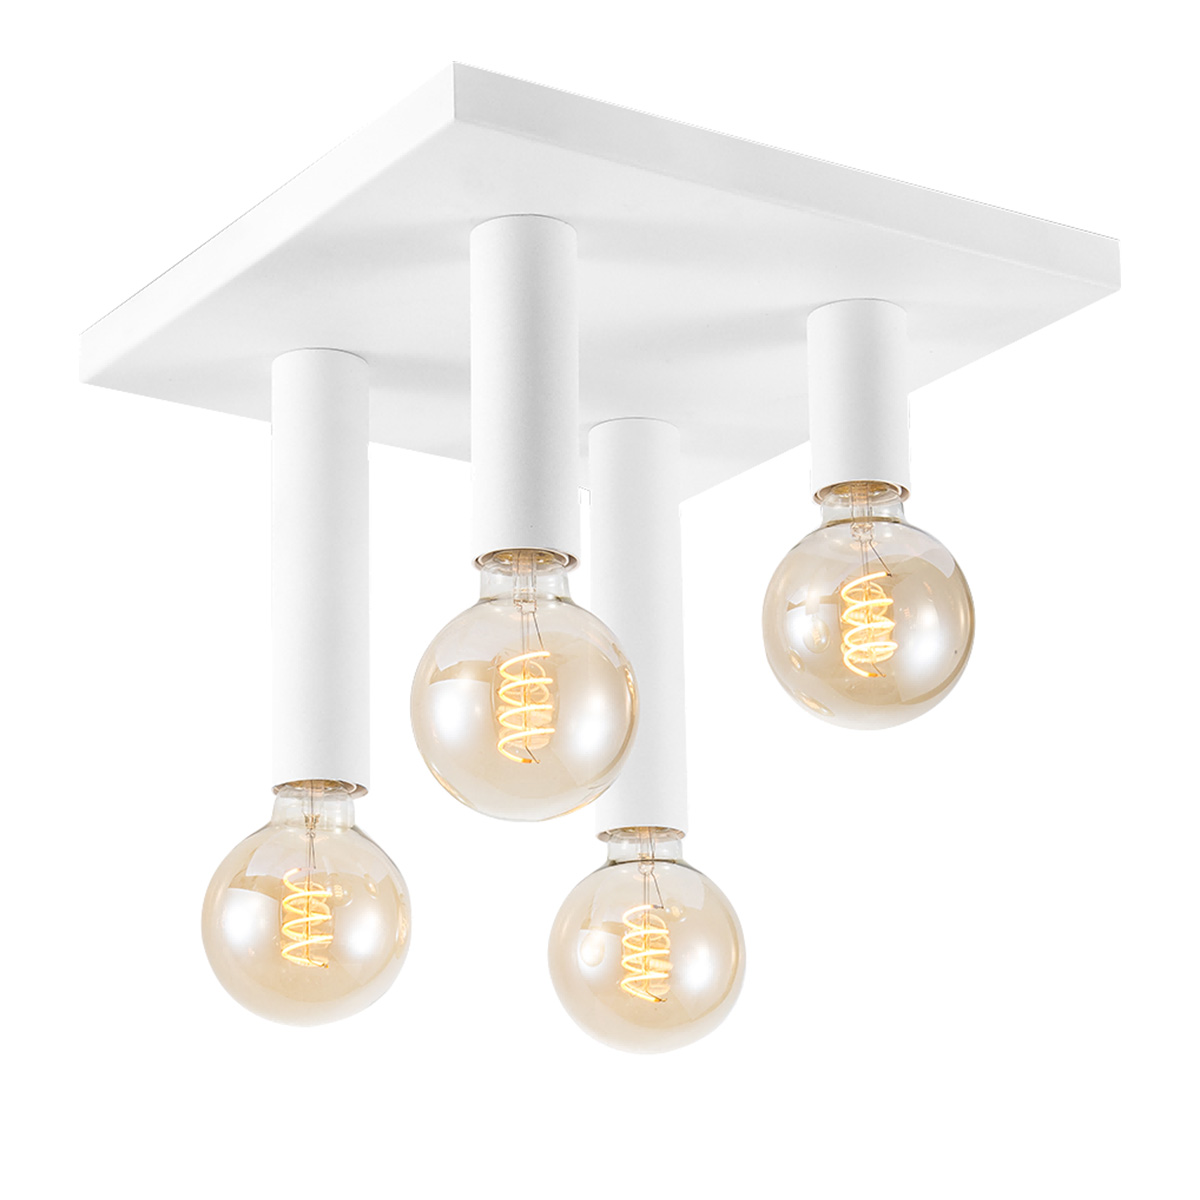 Tangla lighting - TLC5002-04SW - LED ceiling lamp 4 Lights - metal in sand white - drop - square - E27